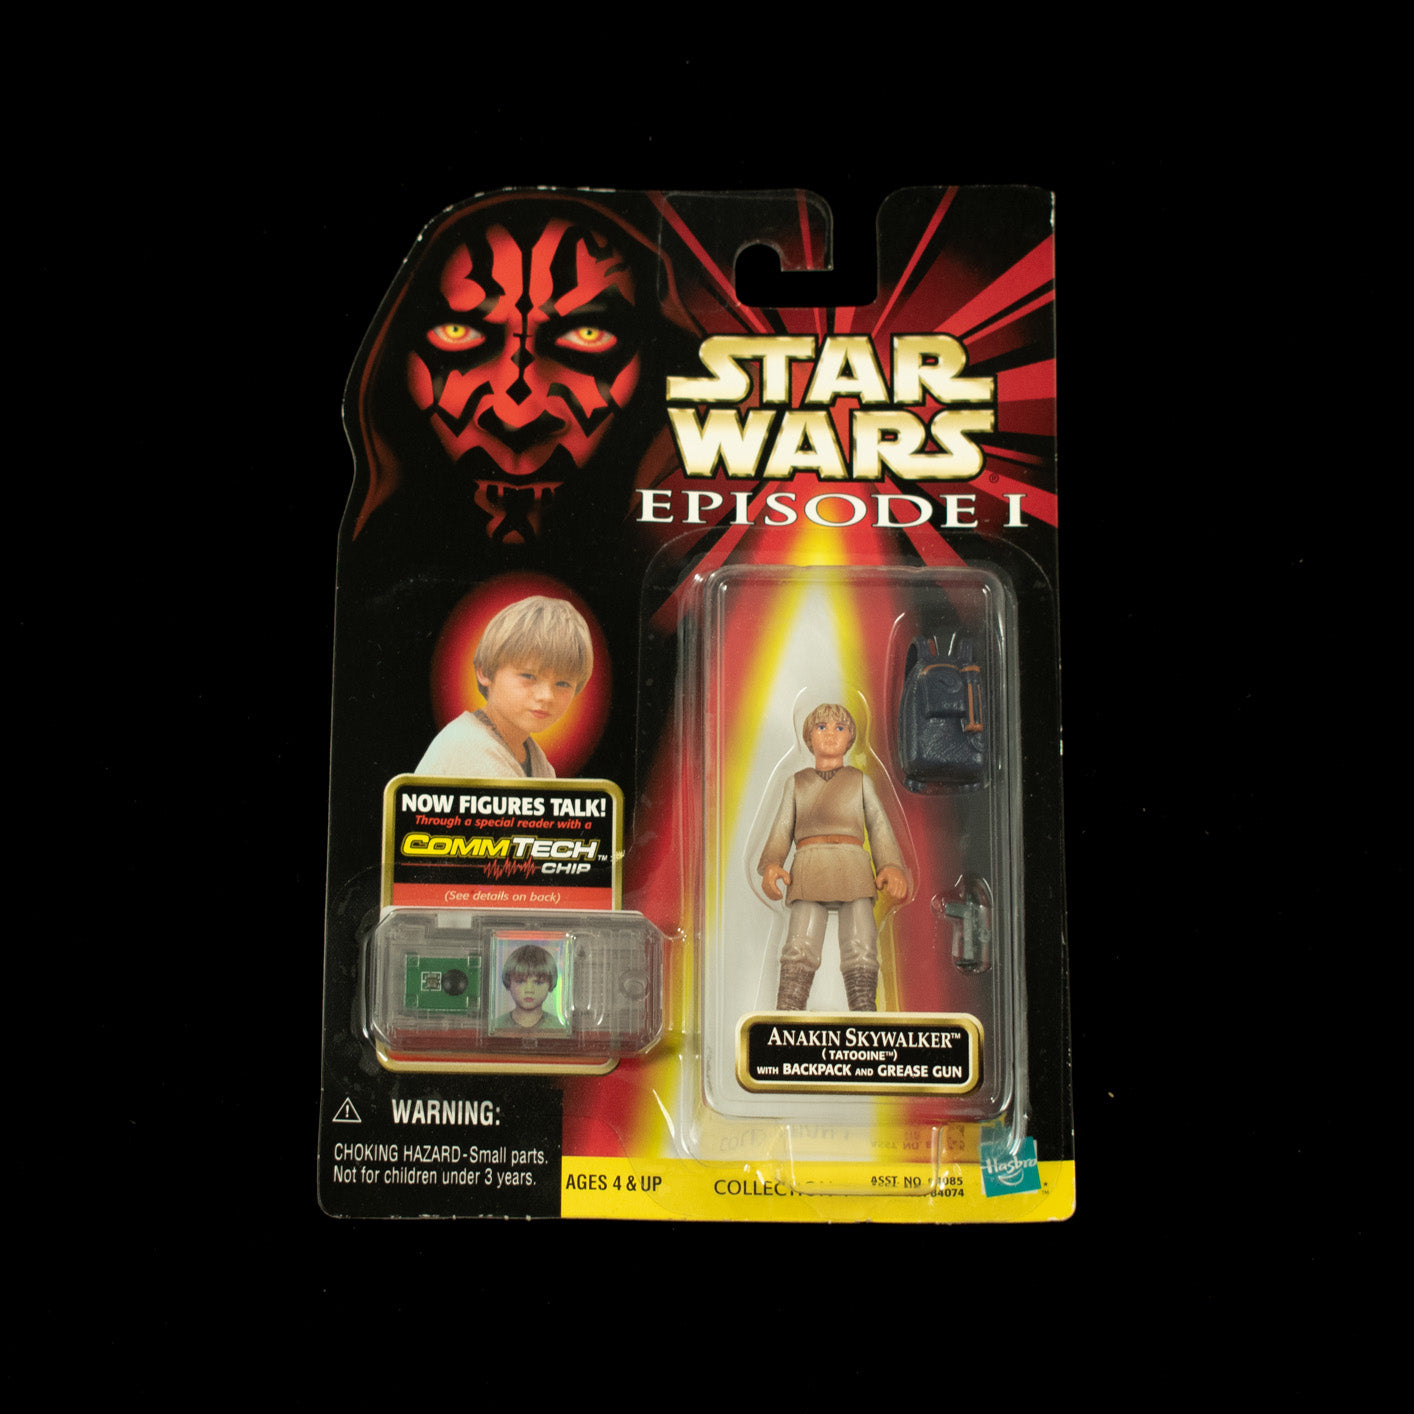 Star Wars Episode 1 Action Figure Anakin Skywalker Tatooine Backpack Hasbro 1999